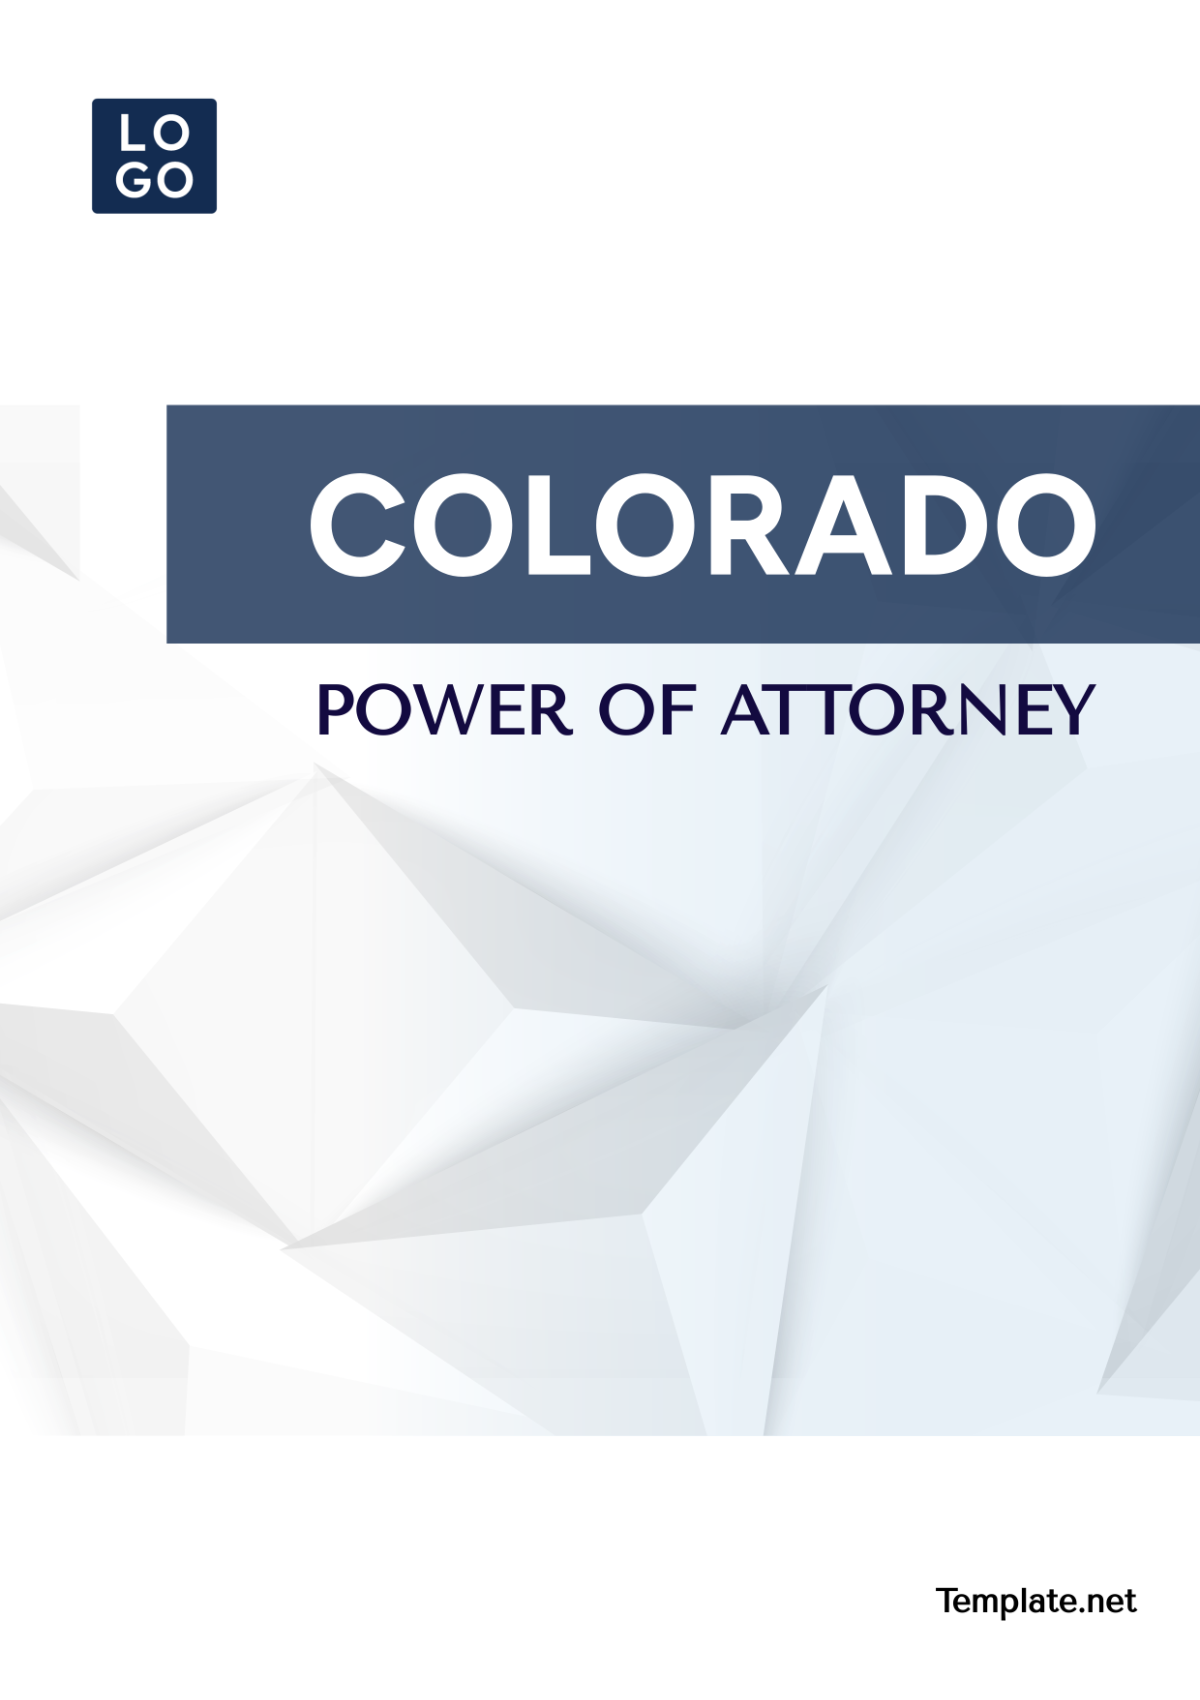 Colorado Power of Attorney Template